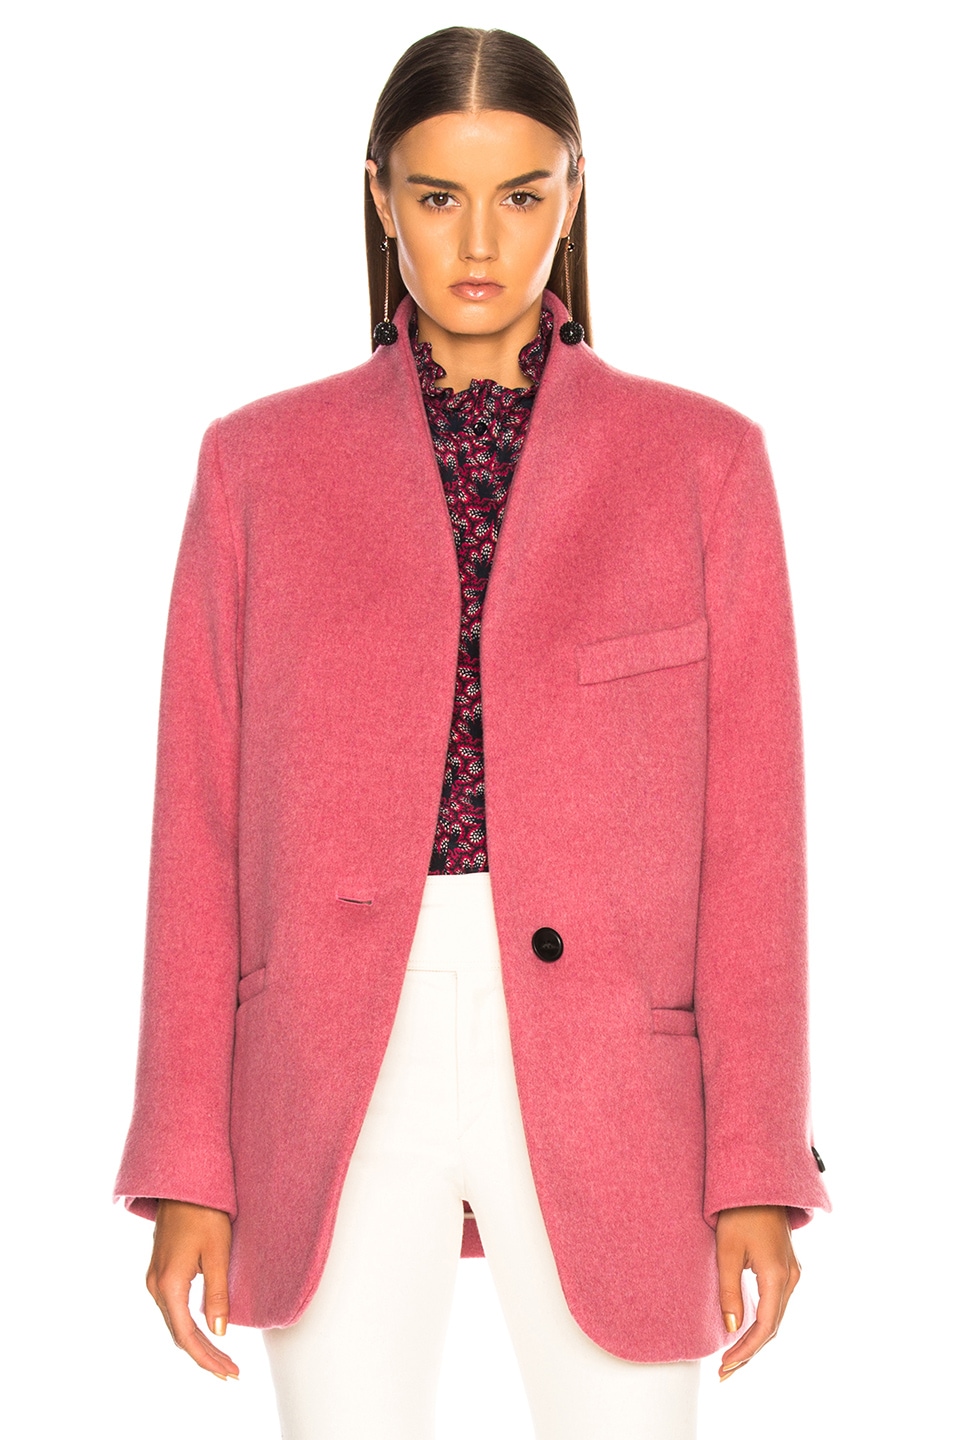 Isabel Marant Felis Coat in Antique Pink | FWRD